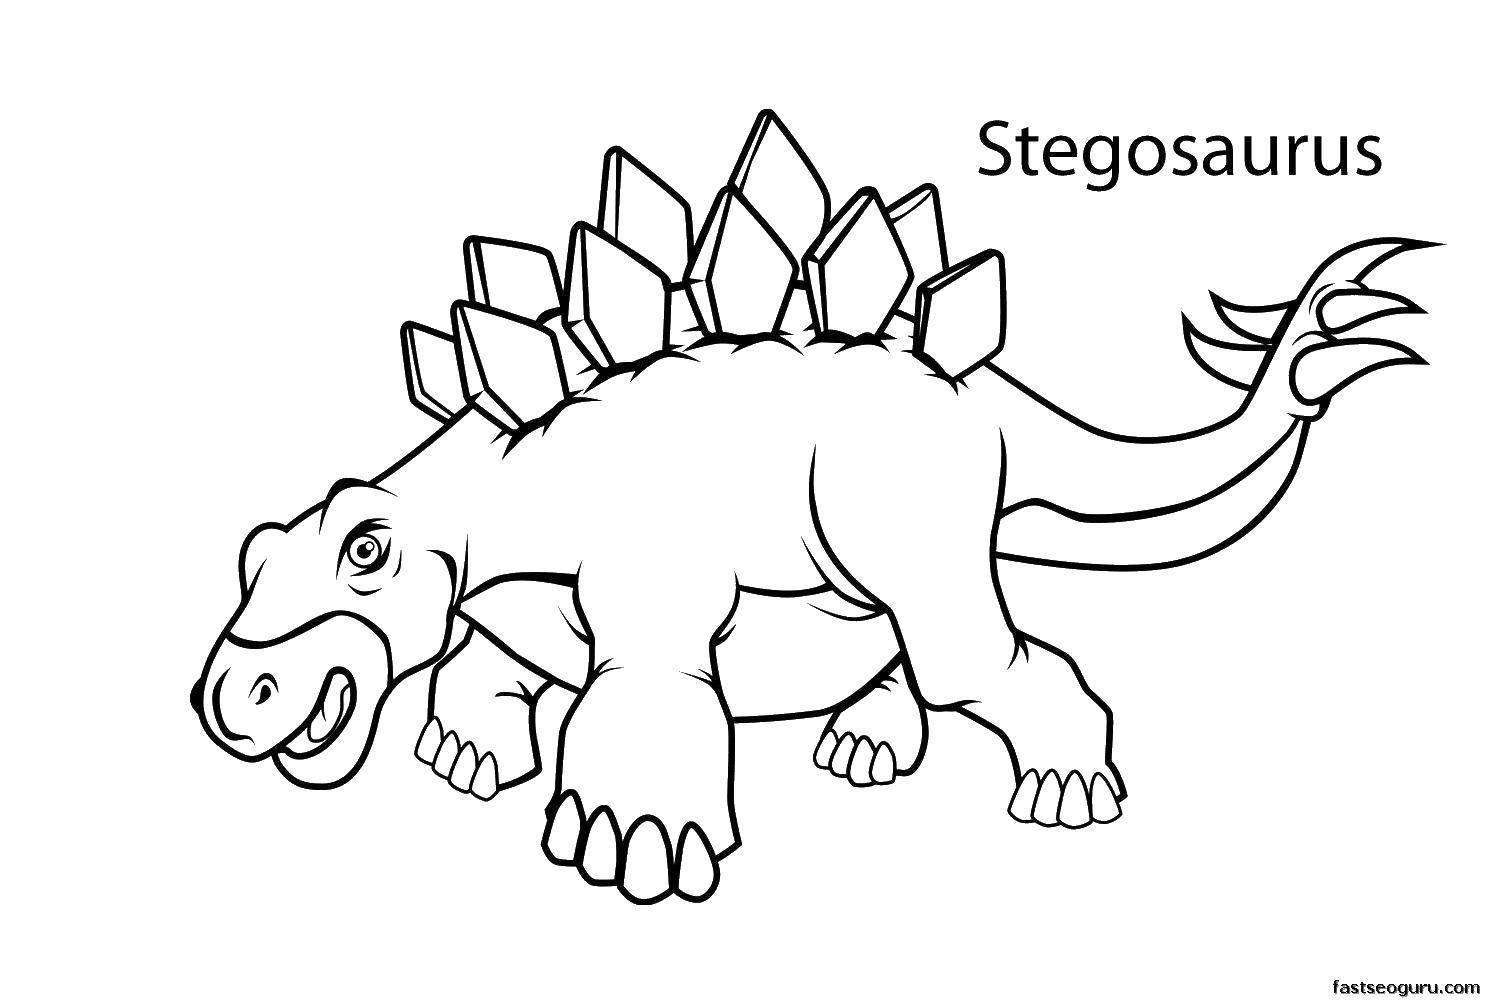 Coloring Stegosaurus. Category dinosaur. Tags:  Stegosaurus, dinosaur.